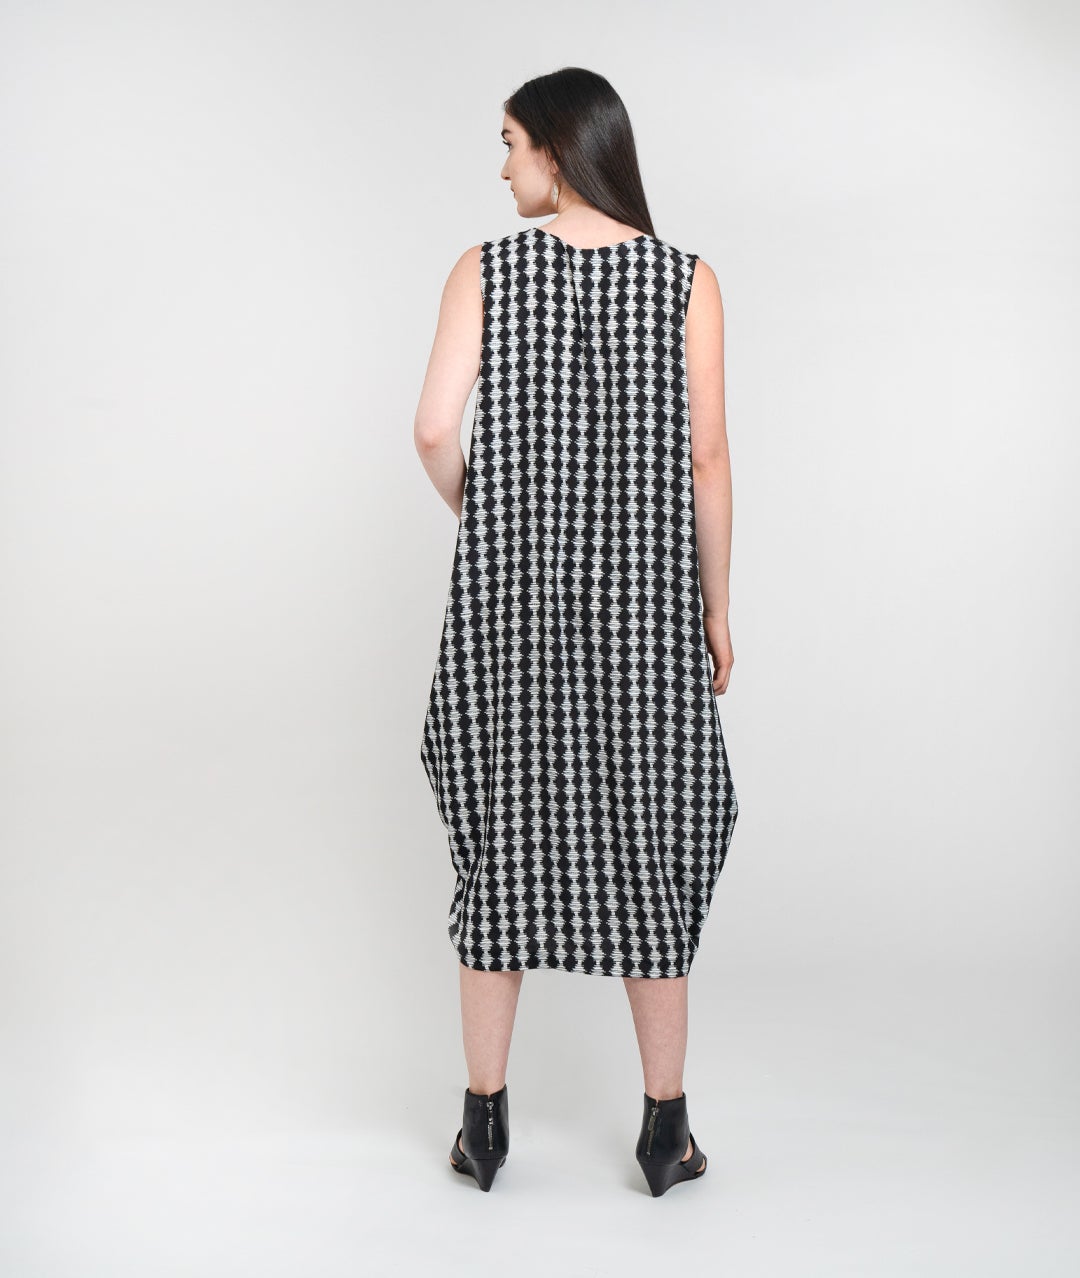 Niche - Channel Print - Rosemary Dress